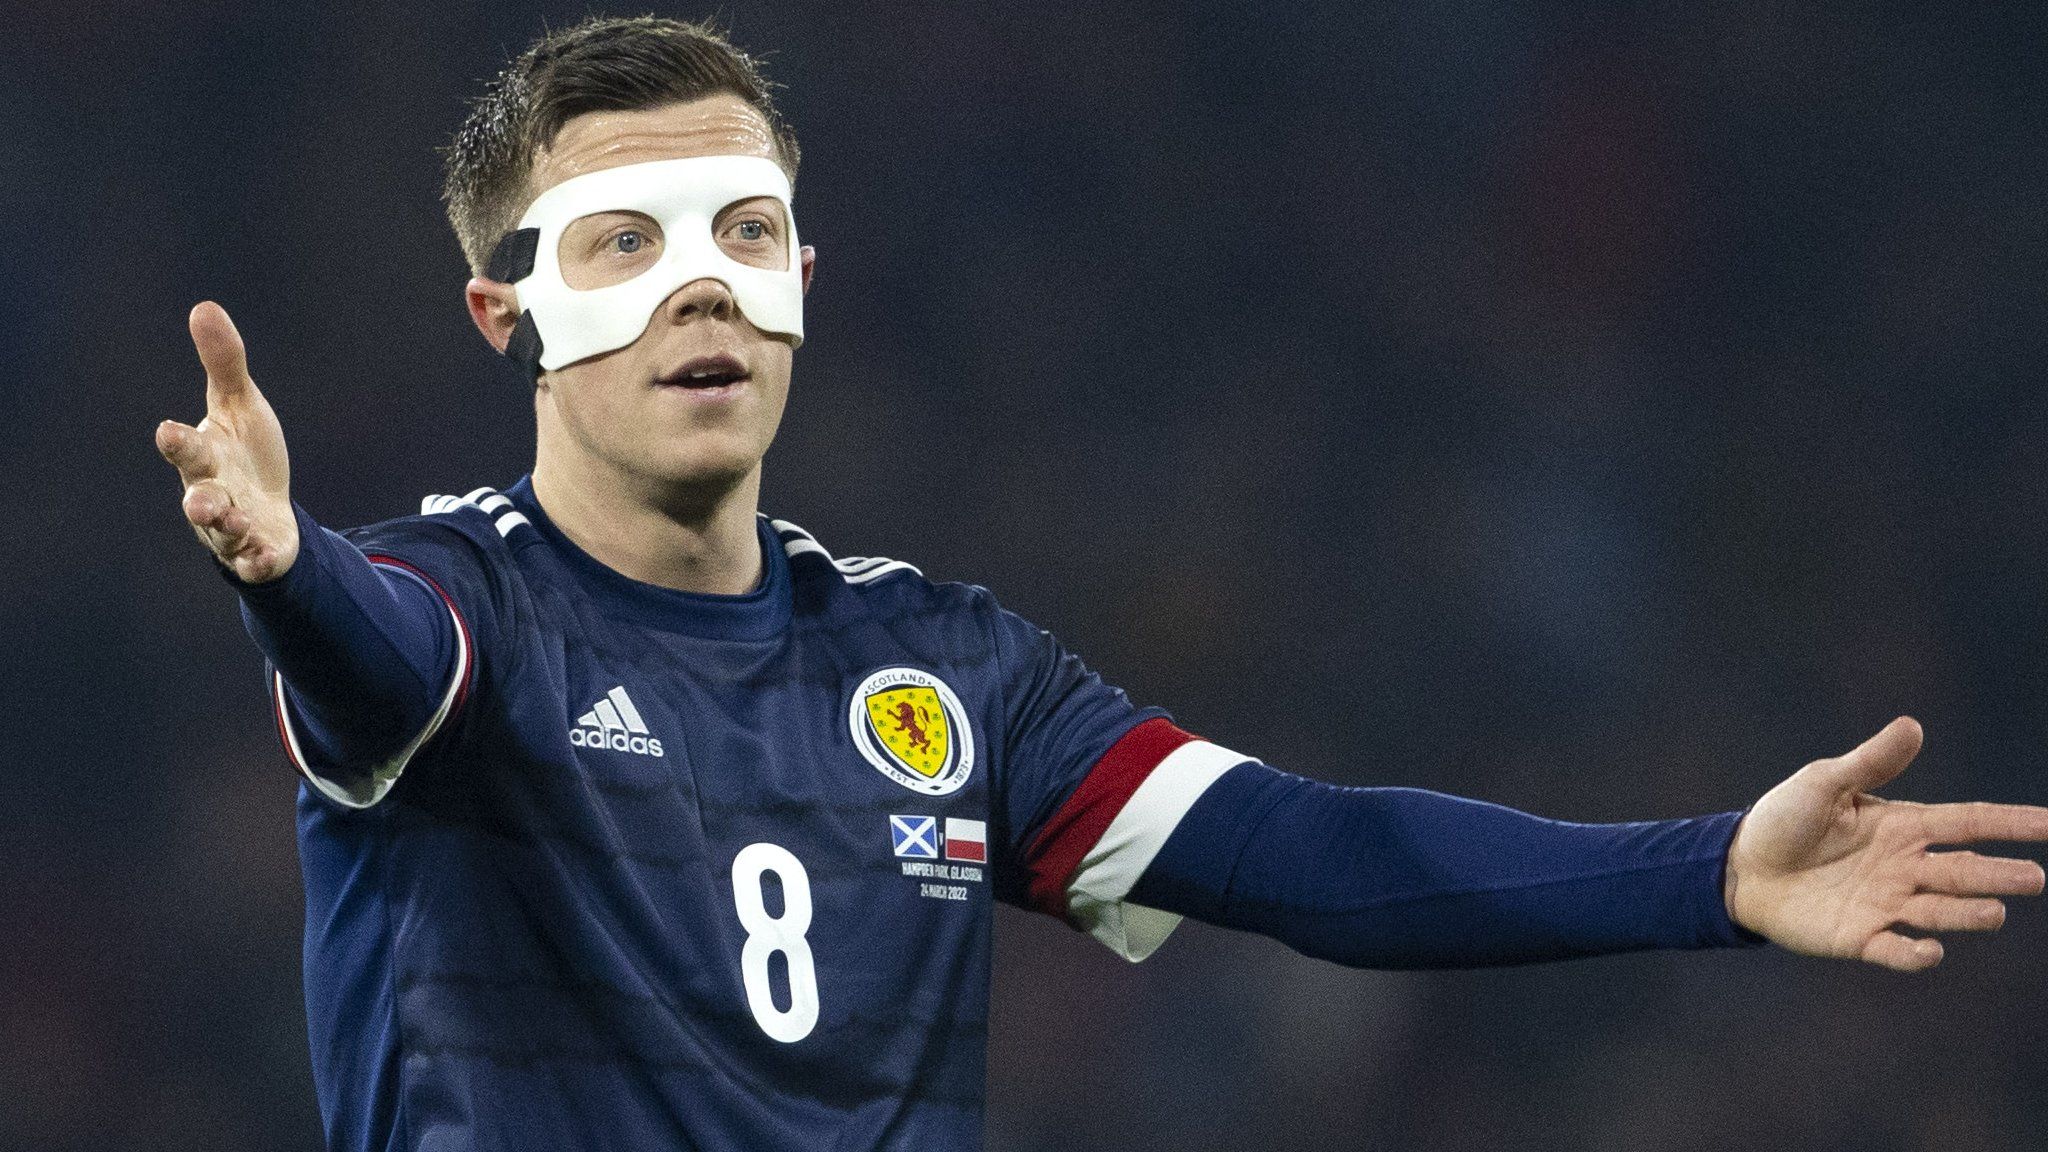 Scotland midfielder Callum McGregor